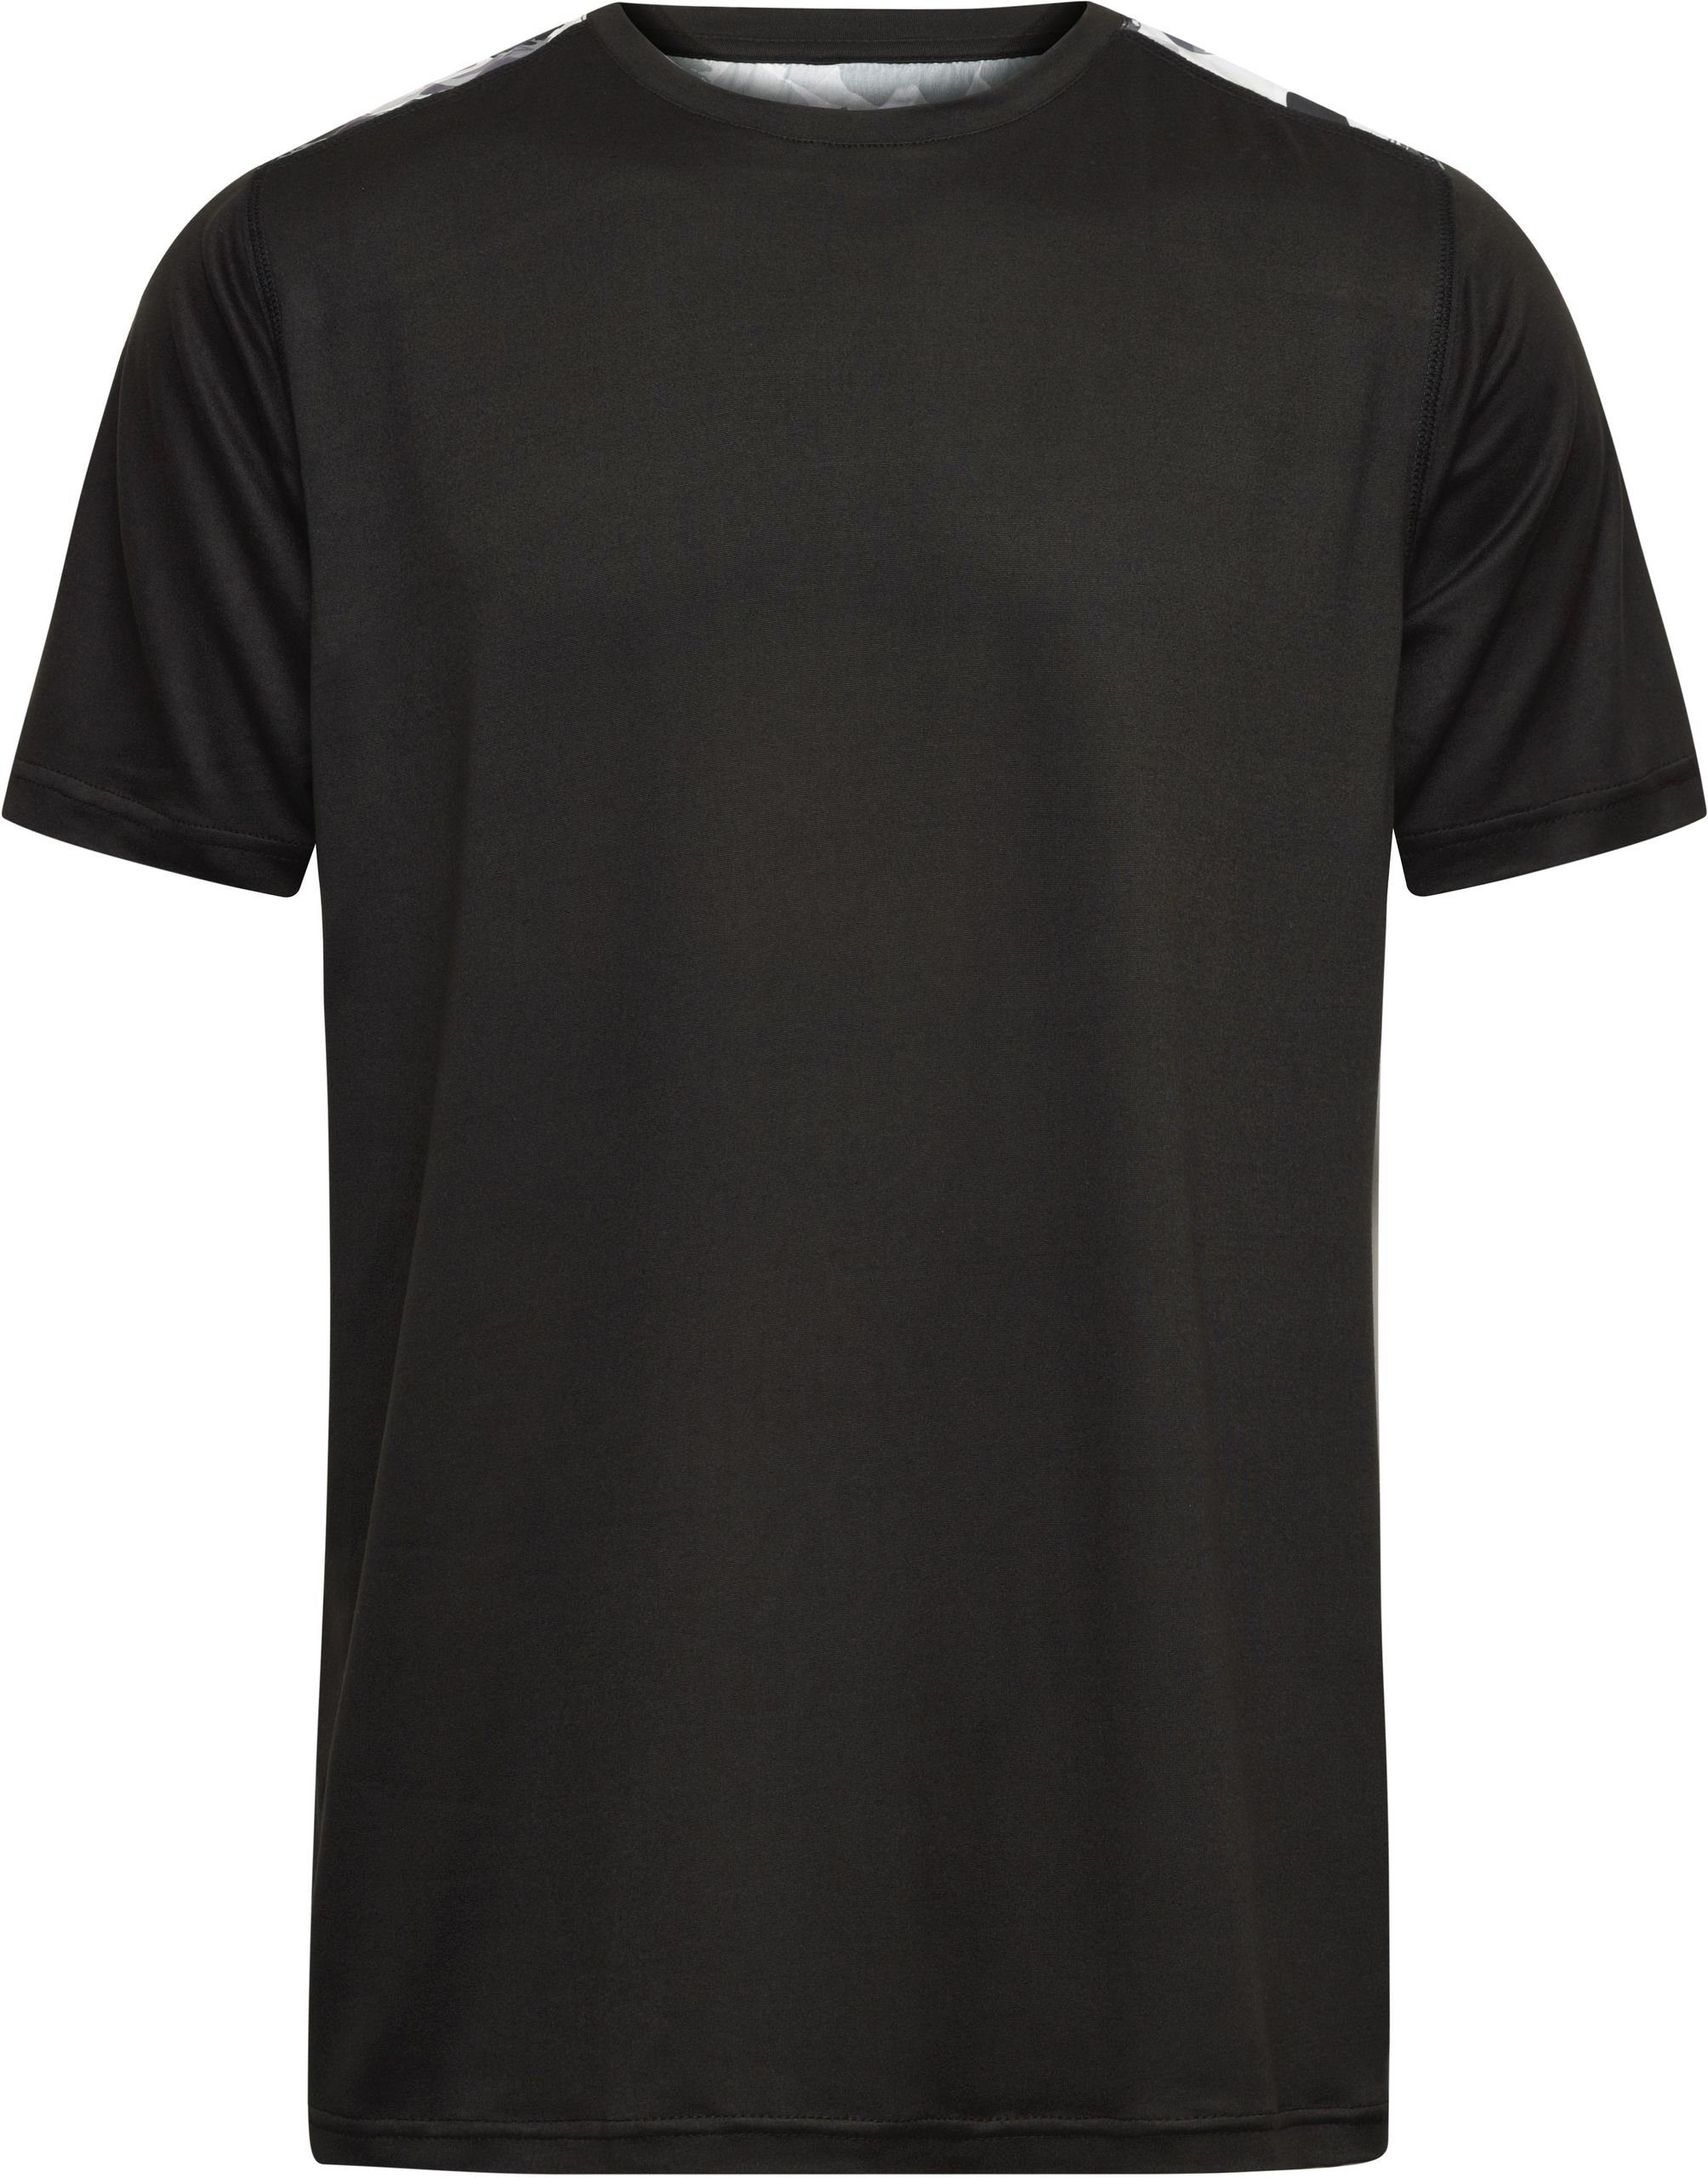 James & Nicholson Trainingsshirt Sport Shirt FaS50524 aus recyceltem Polyester black/black printed